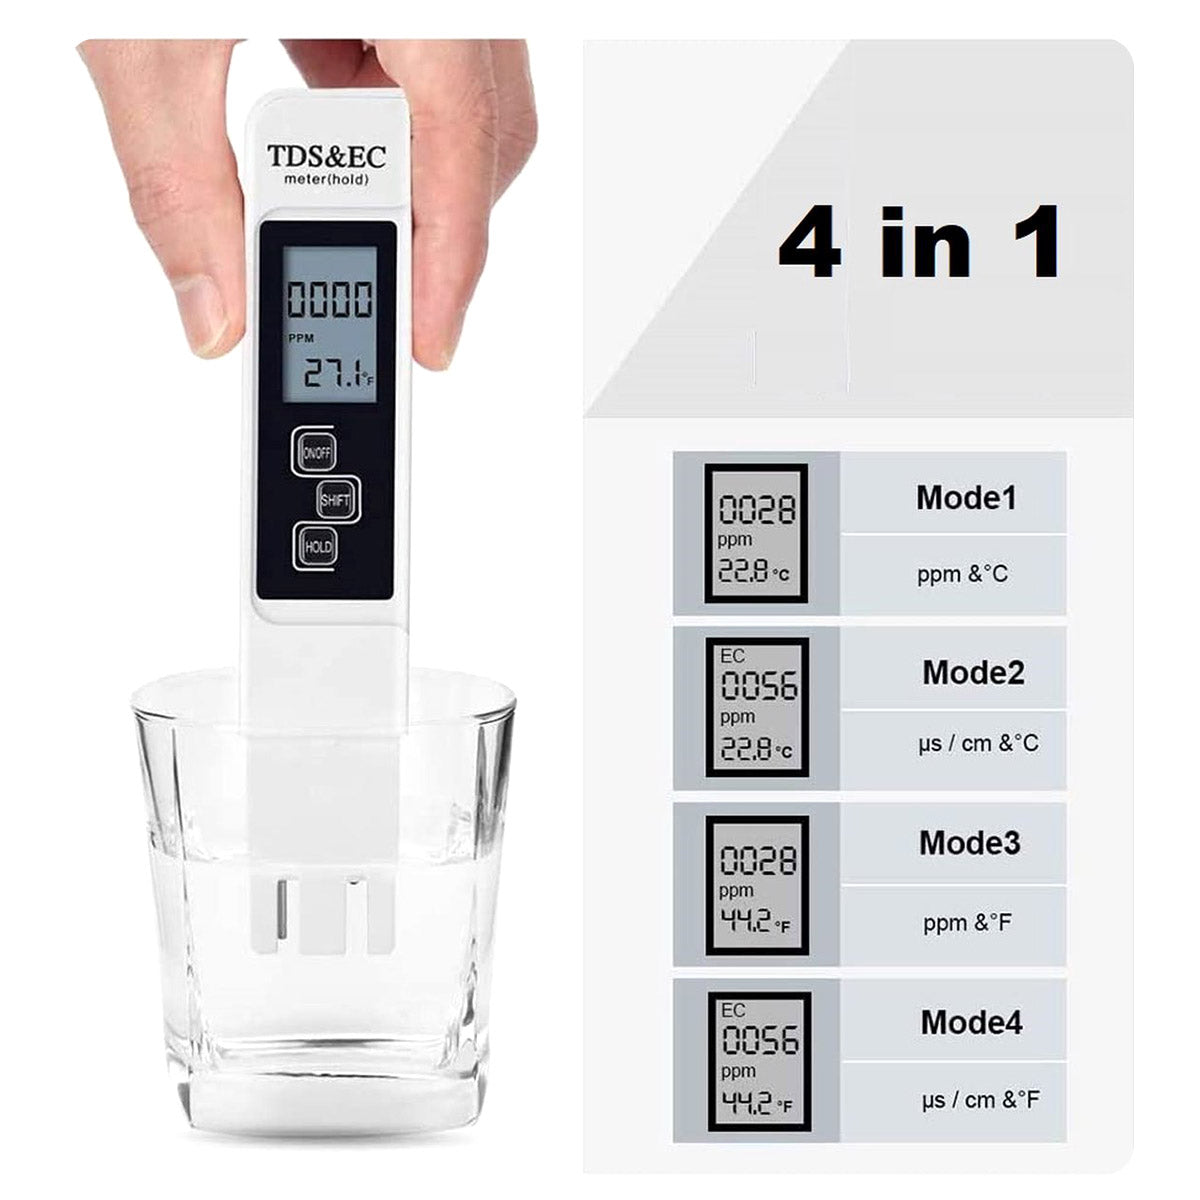 Ariko Professionele Waterhardheidsmeter - Accurate 3-in-1 TDS, EC, en Water Temperatuur Meter - inclusief batterij